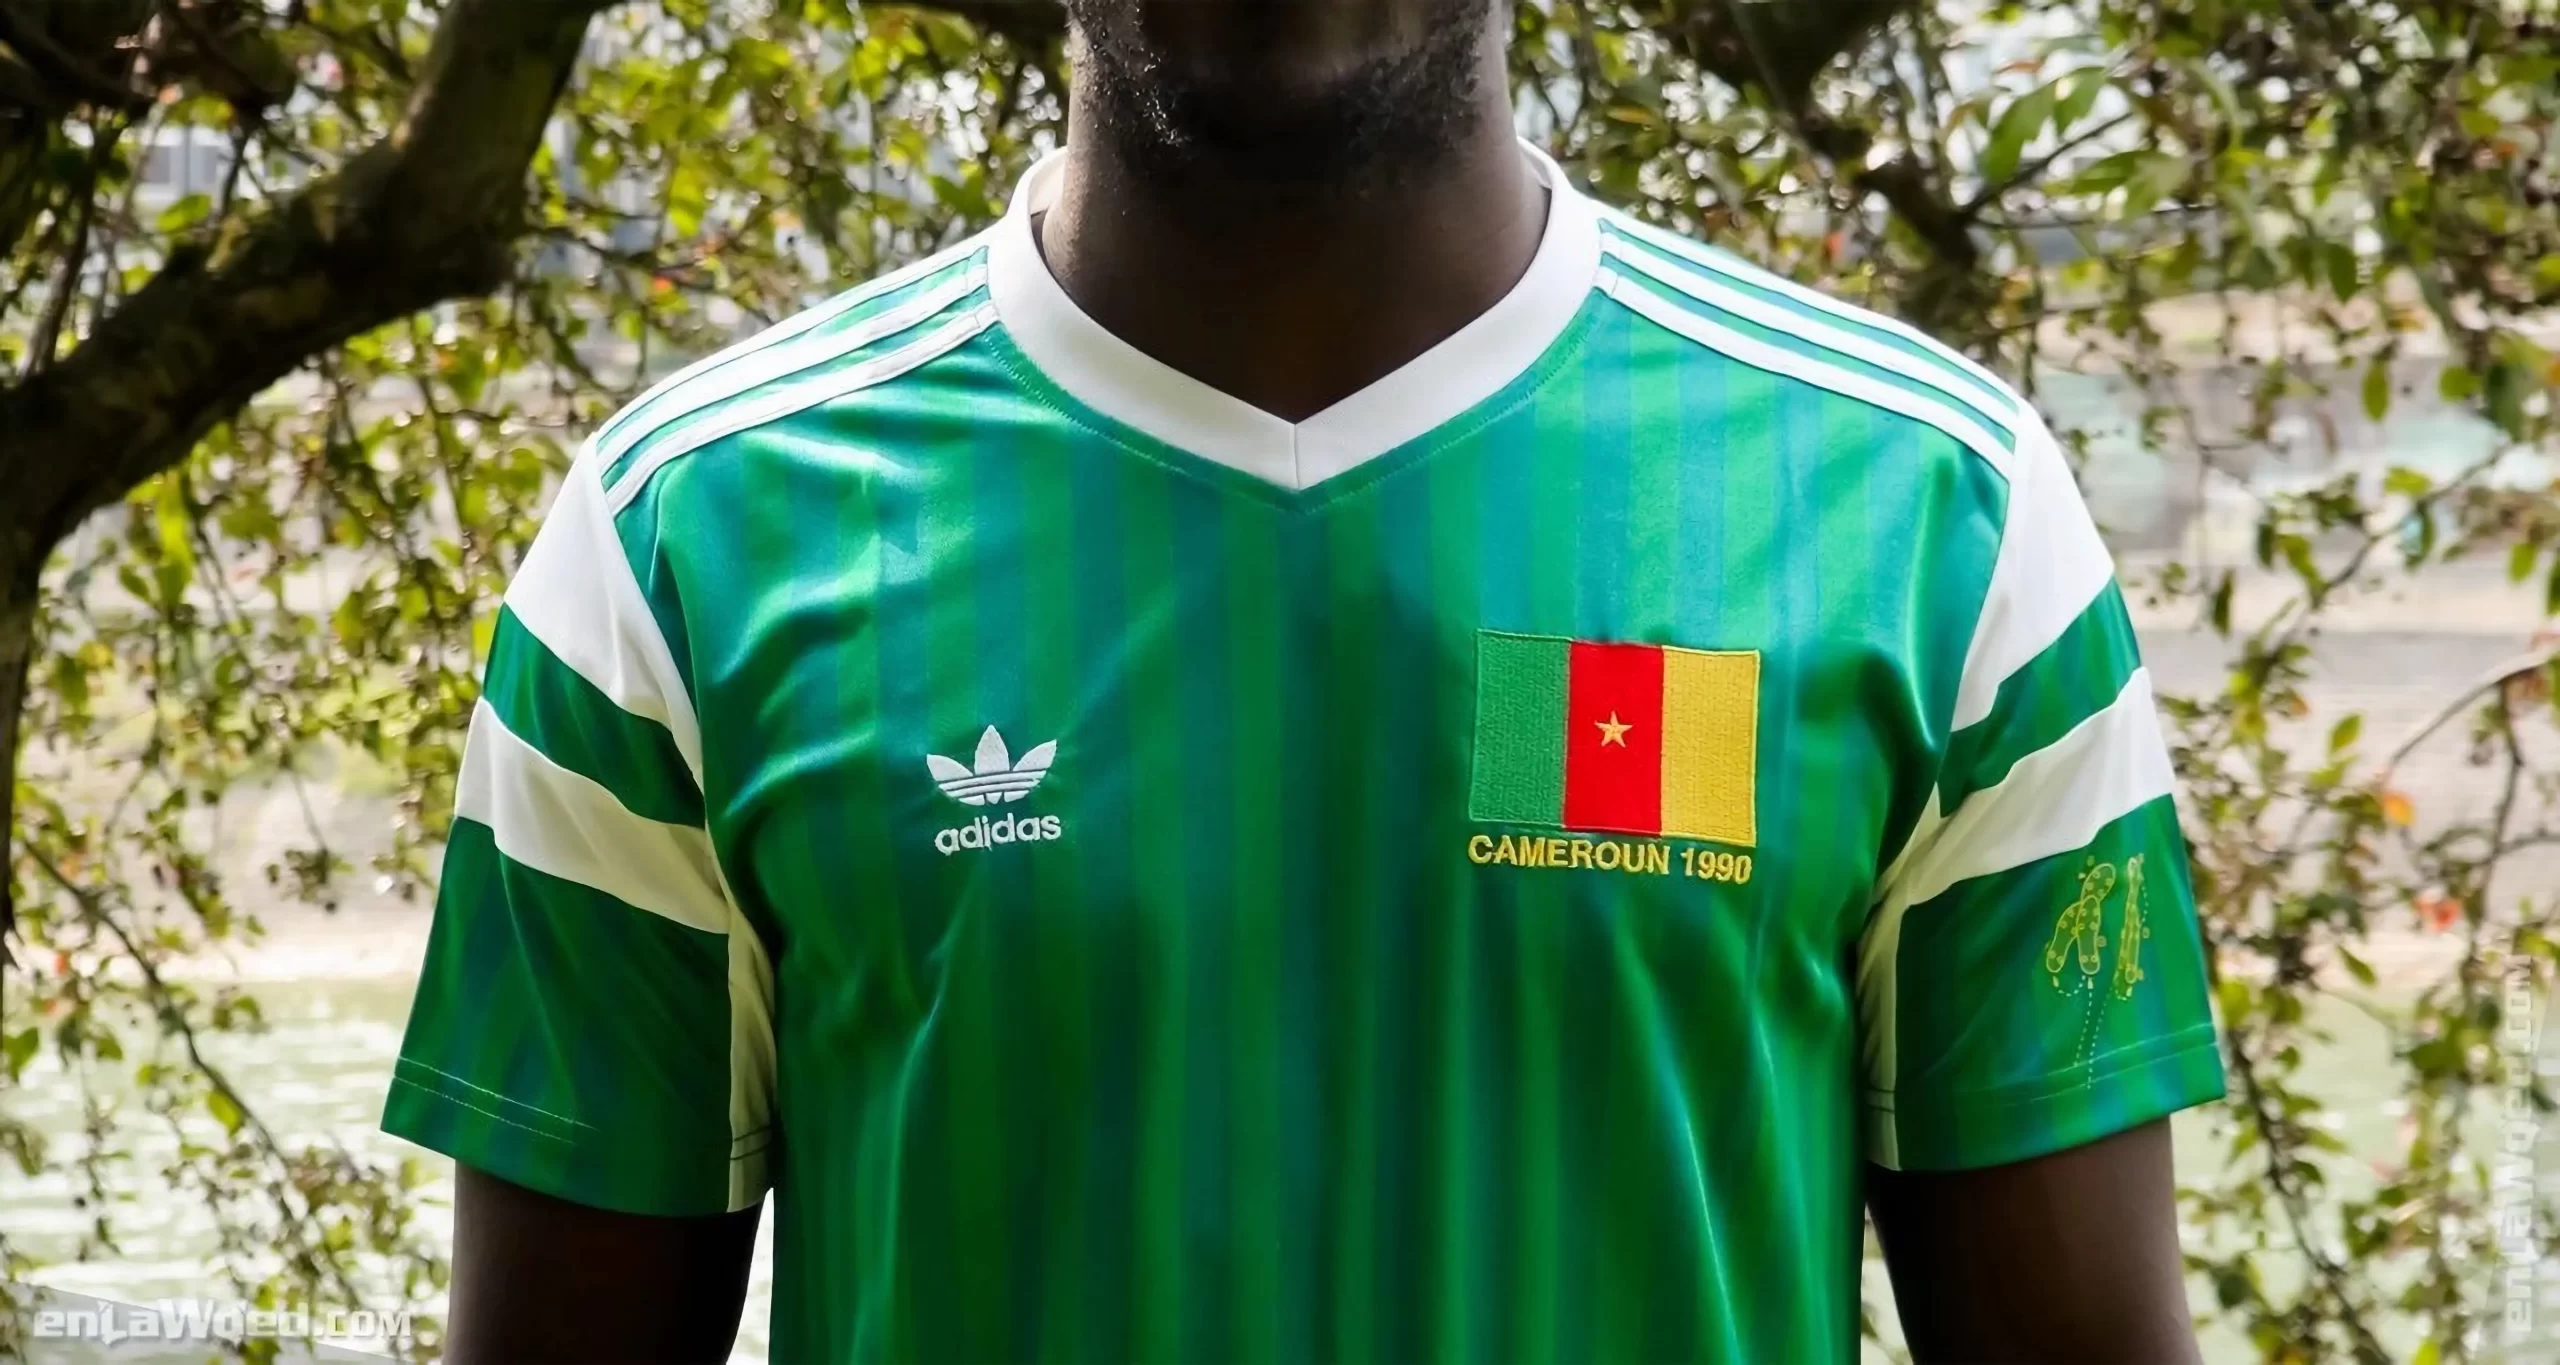 Men's 2006 Cameroon '90 Dancing Lion Jersey by Adidas: Intelligent (EnLawded.com file #lmchk90486ip2y122992kg9st)